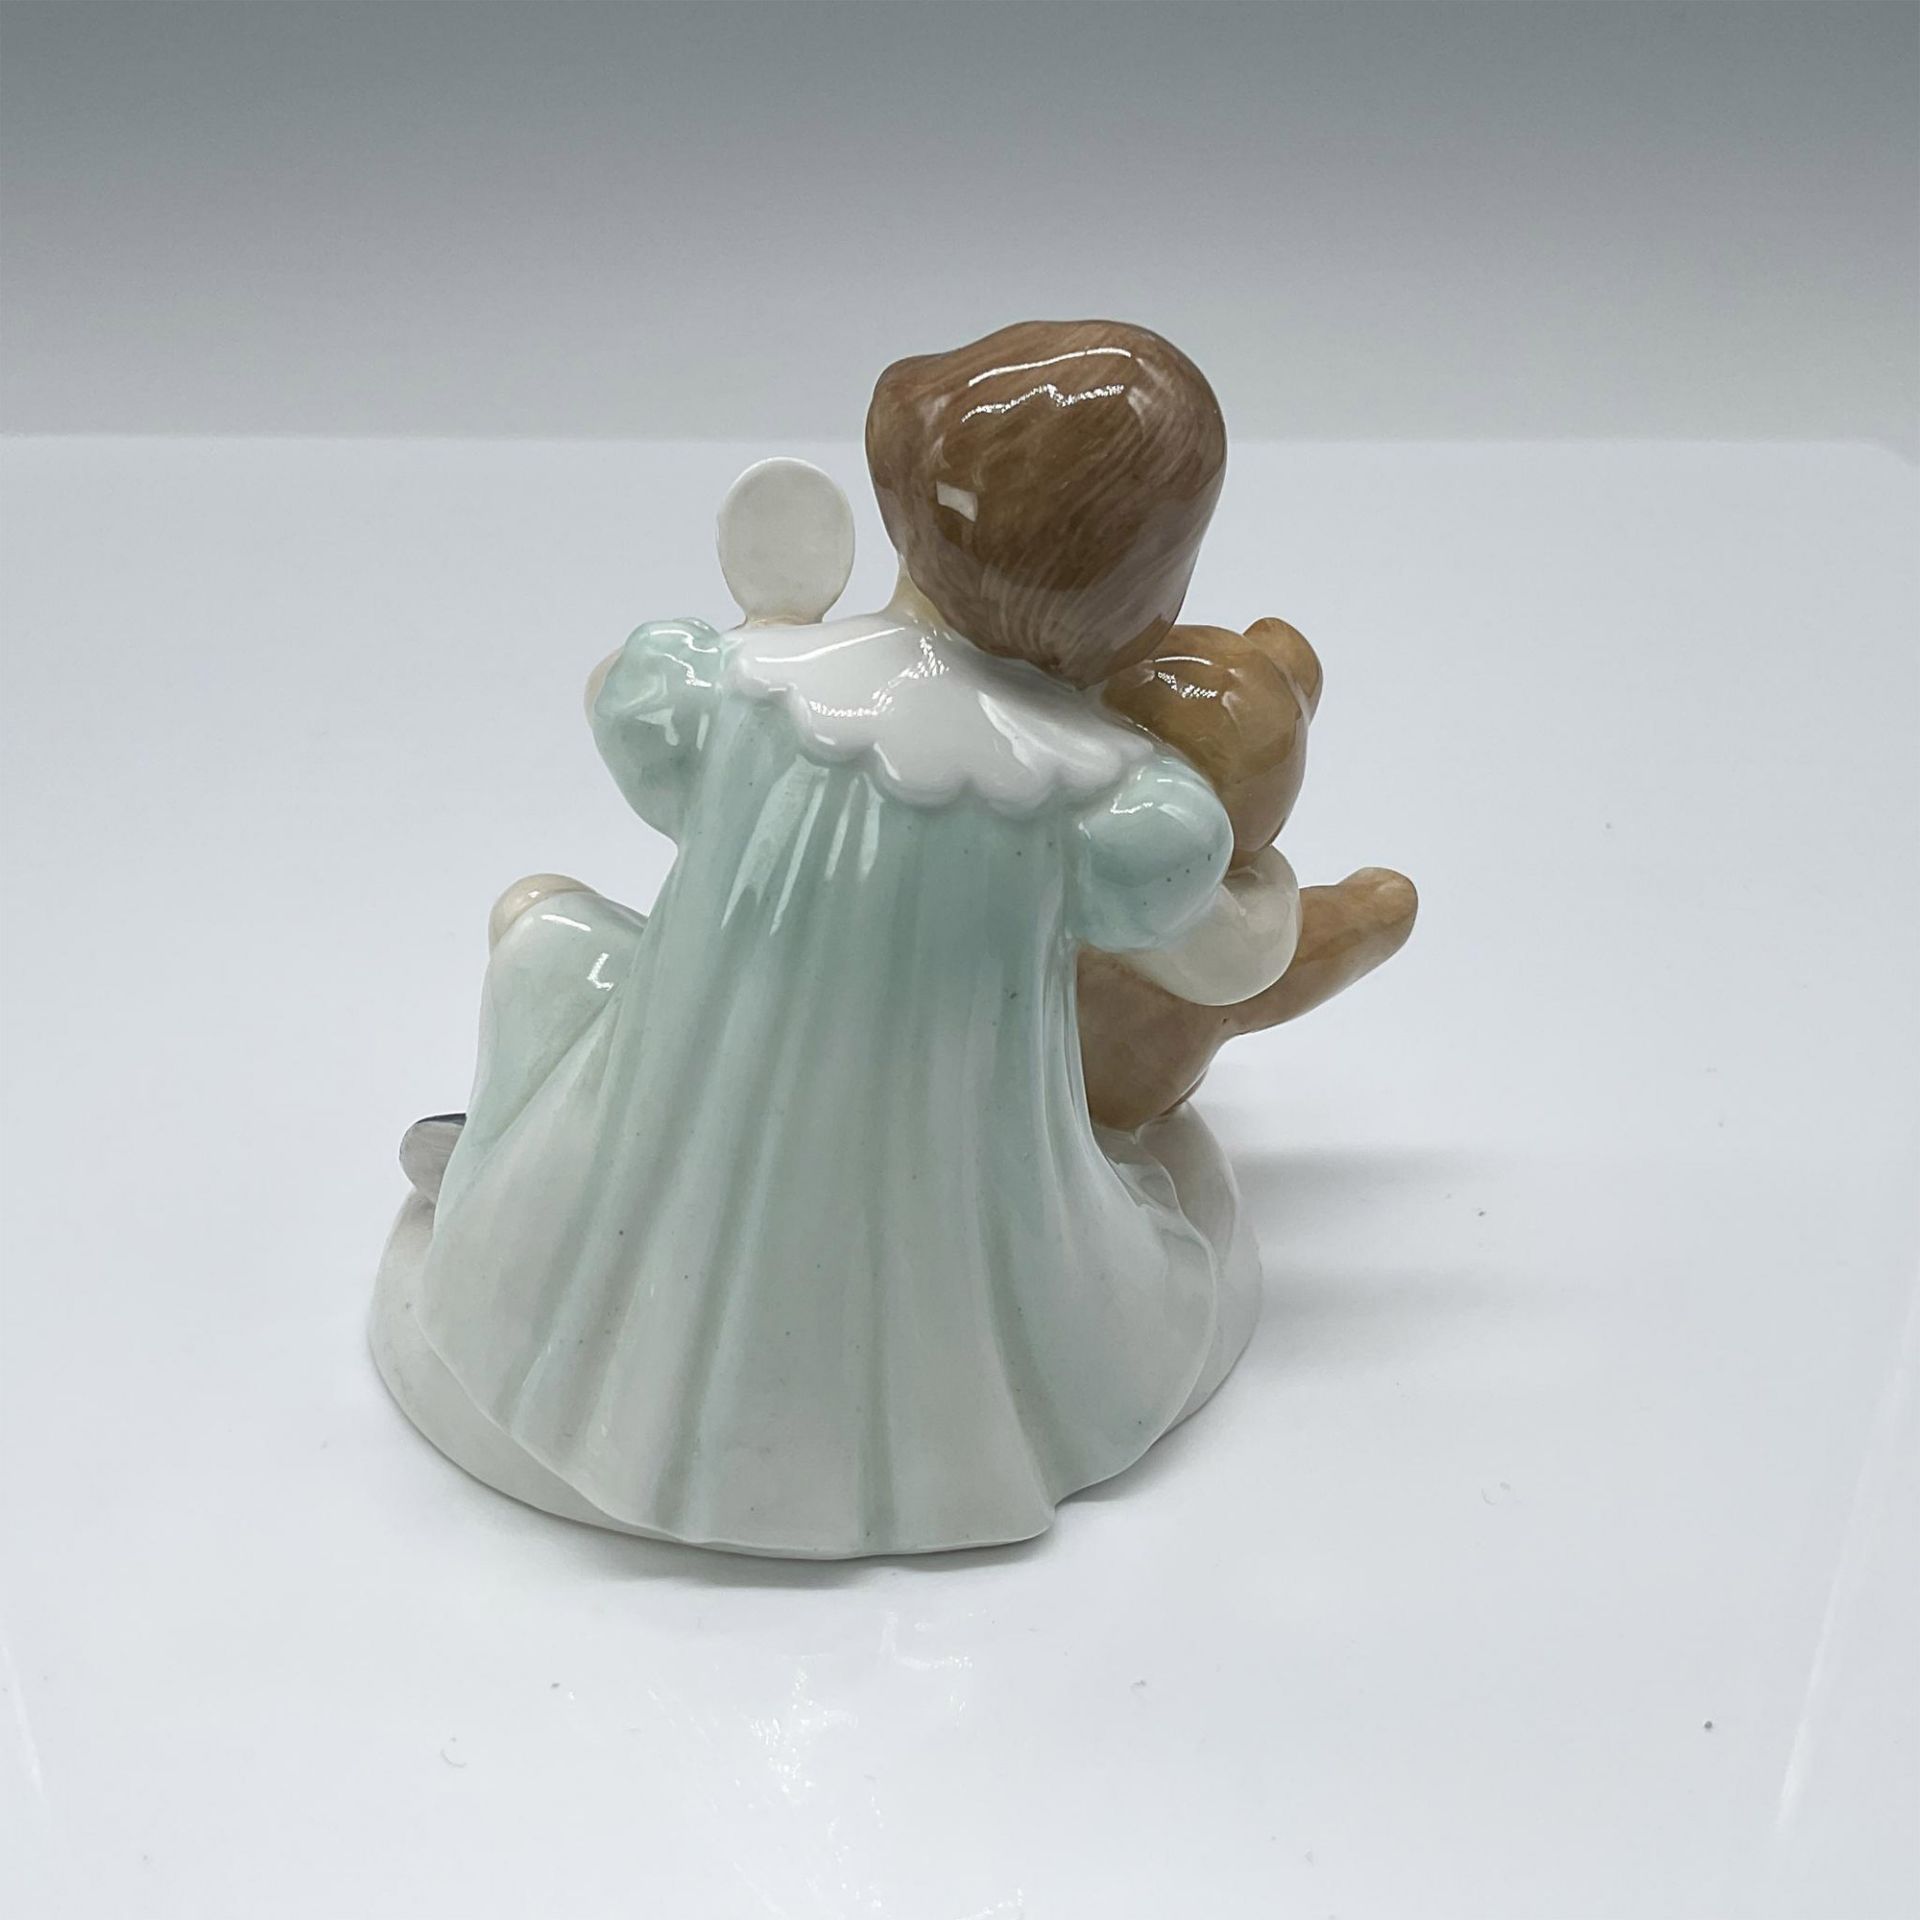 My Teddy - HN2177 - Royal Doulton Figurine - Image 2 of 3